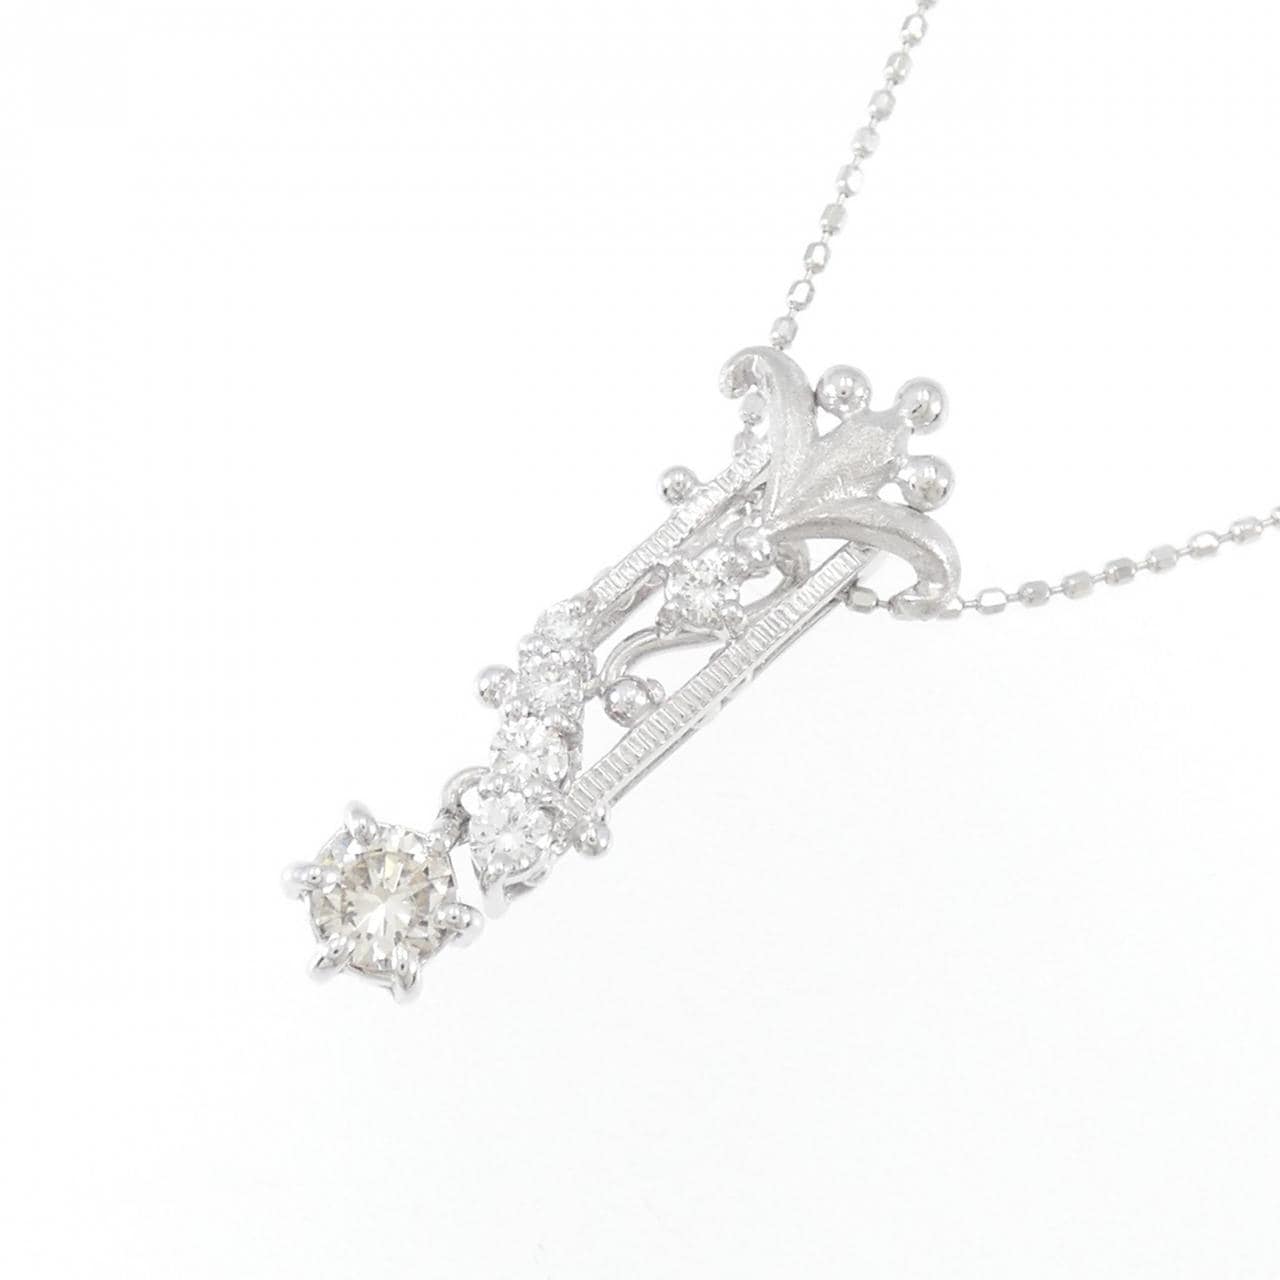 K18WG/750WG Diamond Necklace 0.38CT